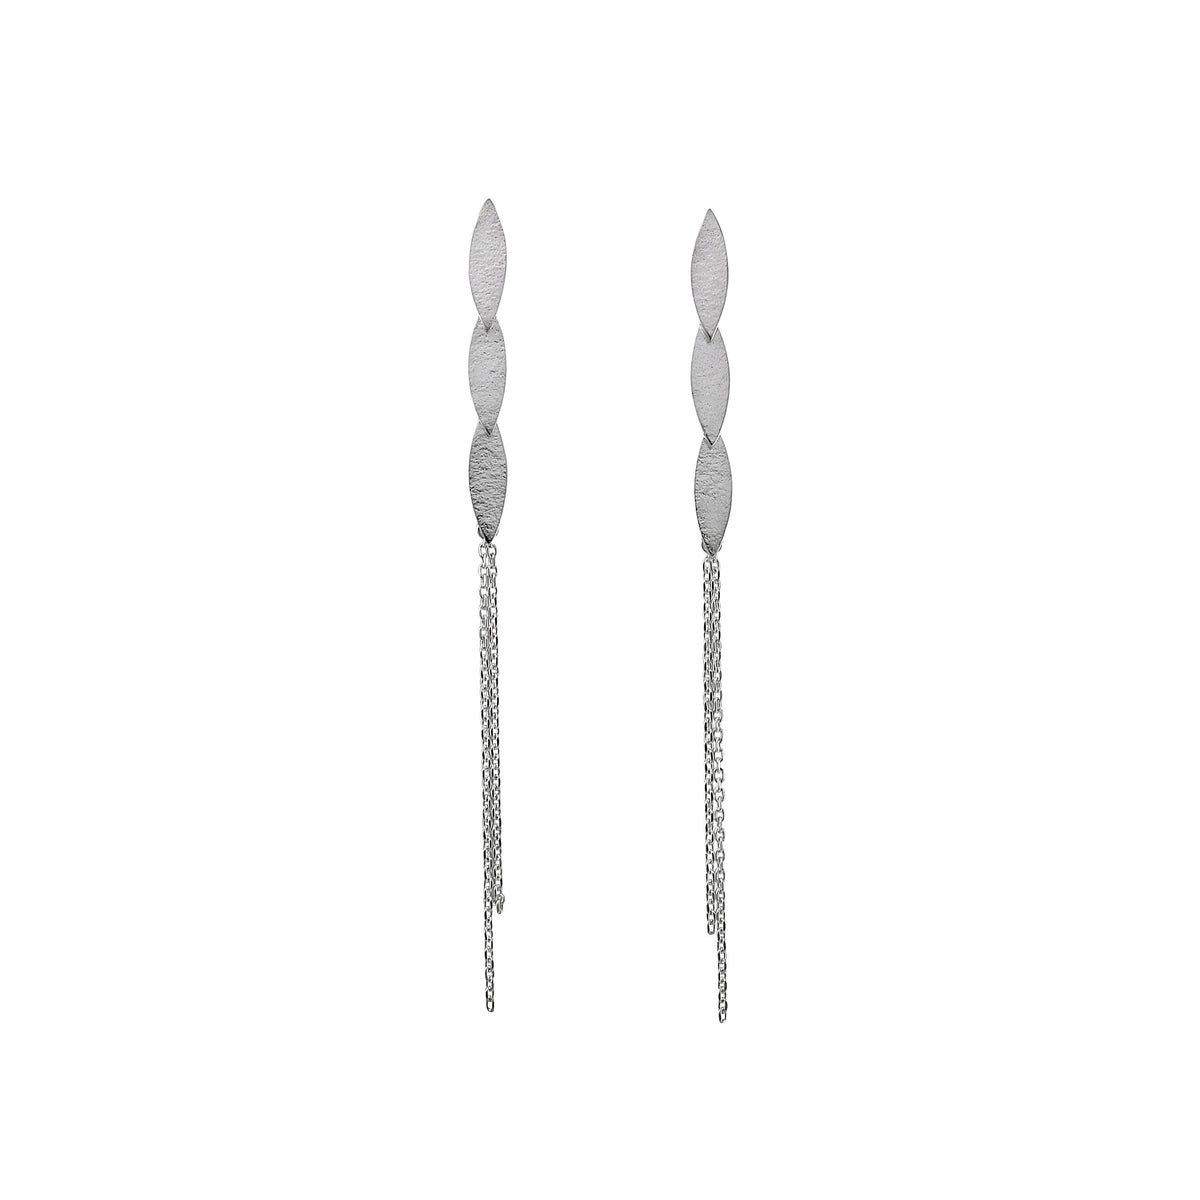 Silver Icarus Tassel earrings by British jeweller Cara Tonkin